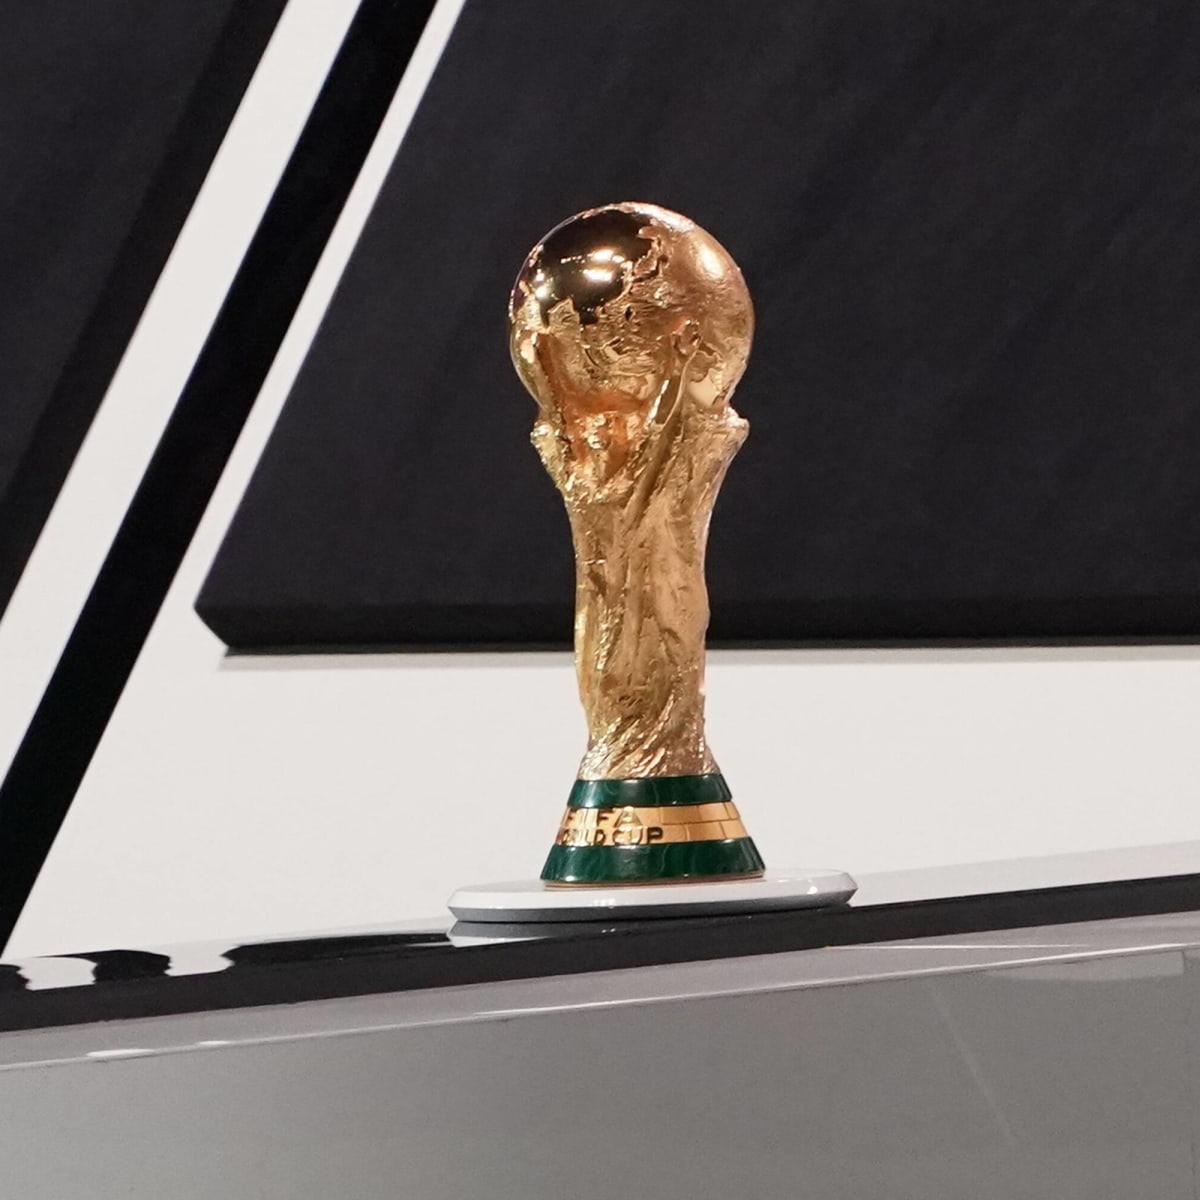 Trophy fifa world cup logo mondial champion symbol